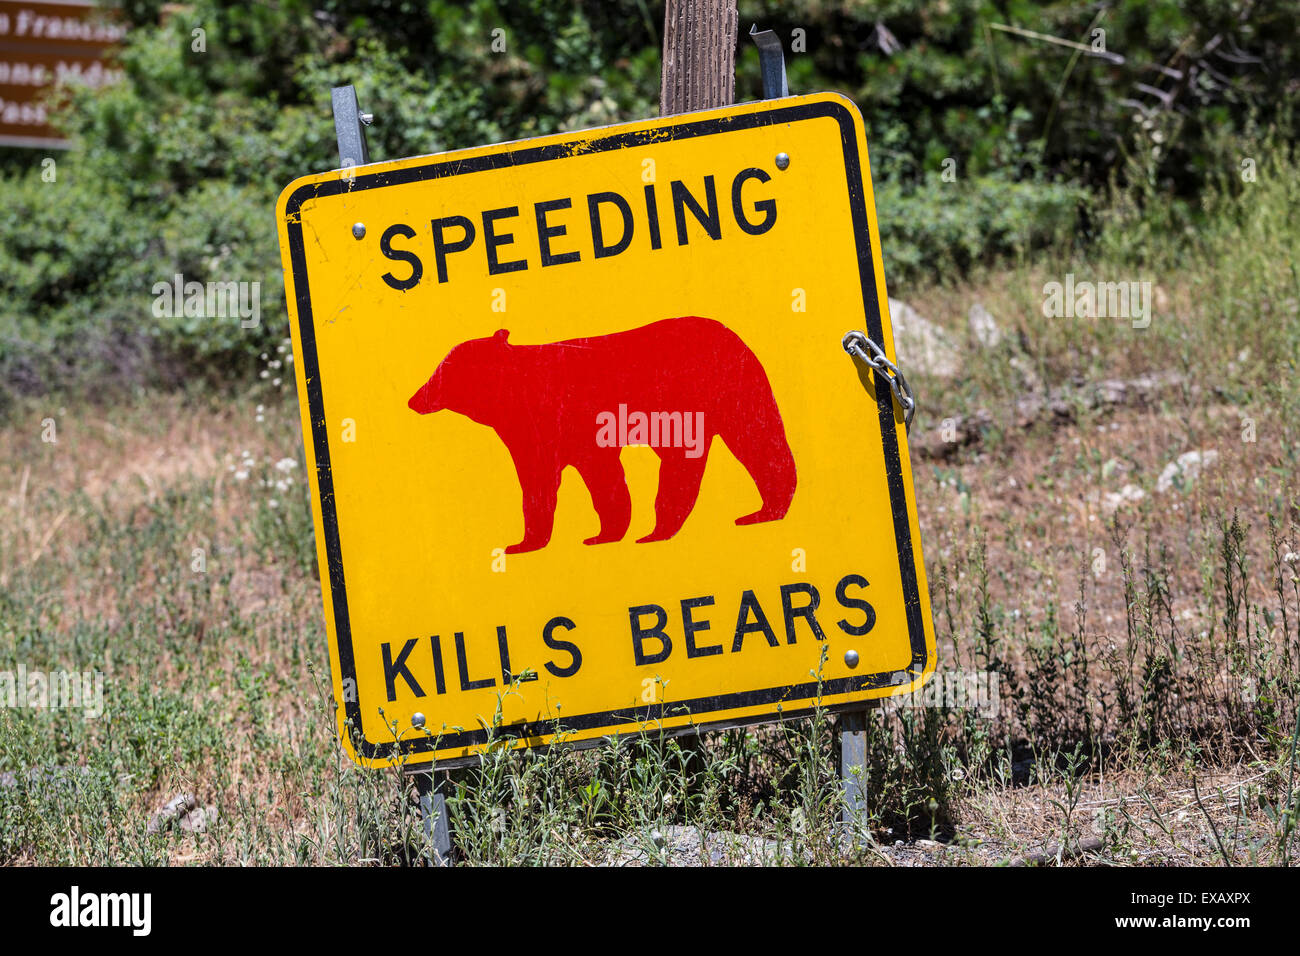 Speeding kills bears warning sign in California's Yosemite National Park. Stock Photo